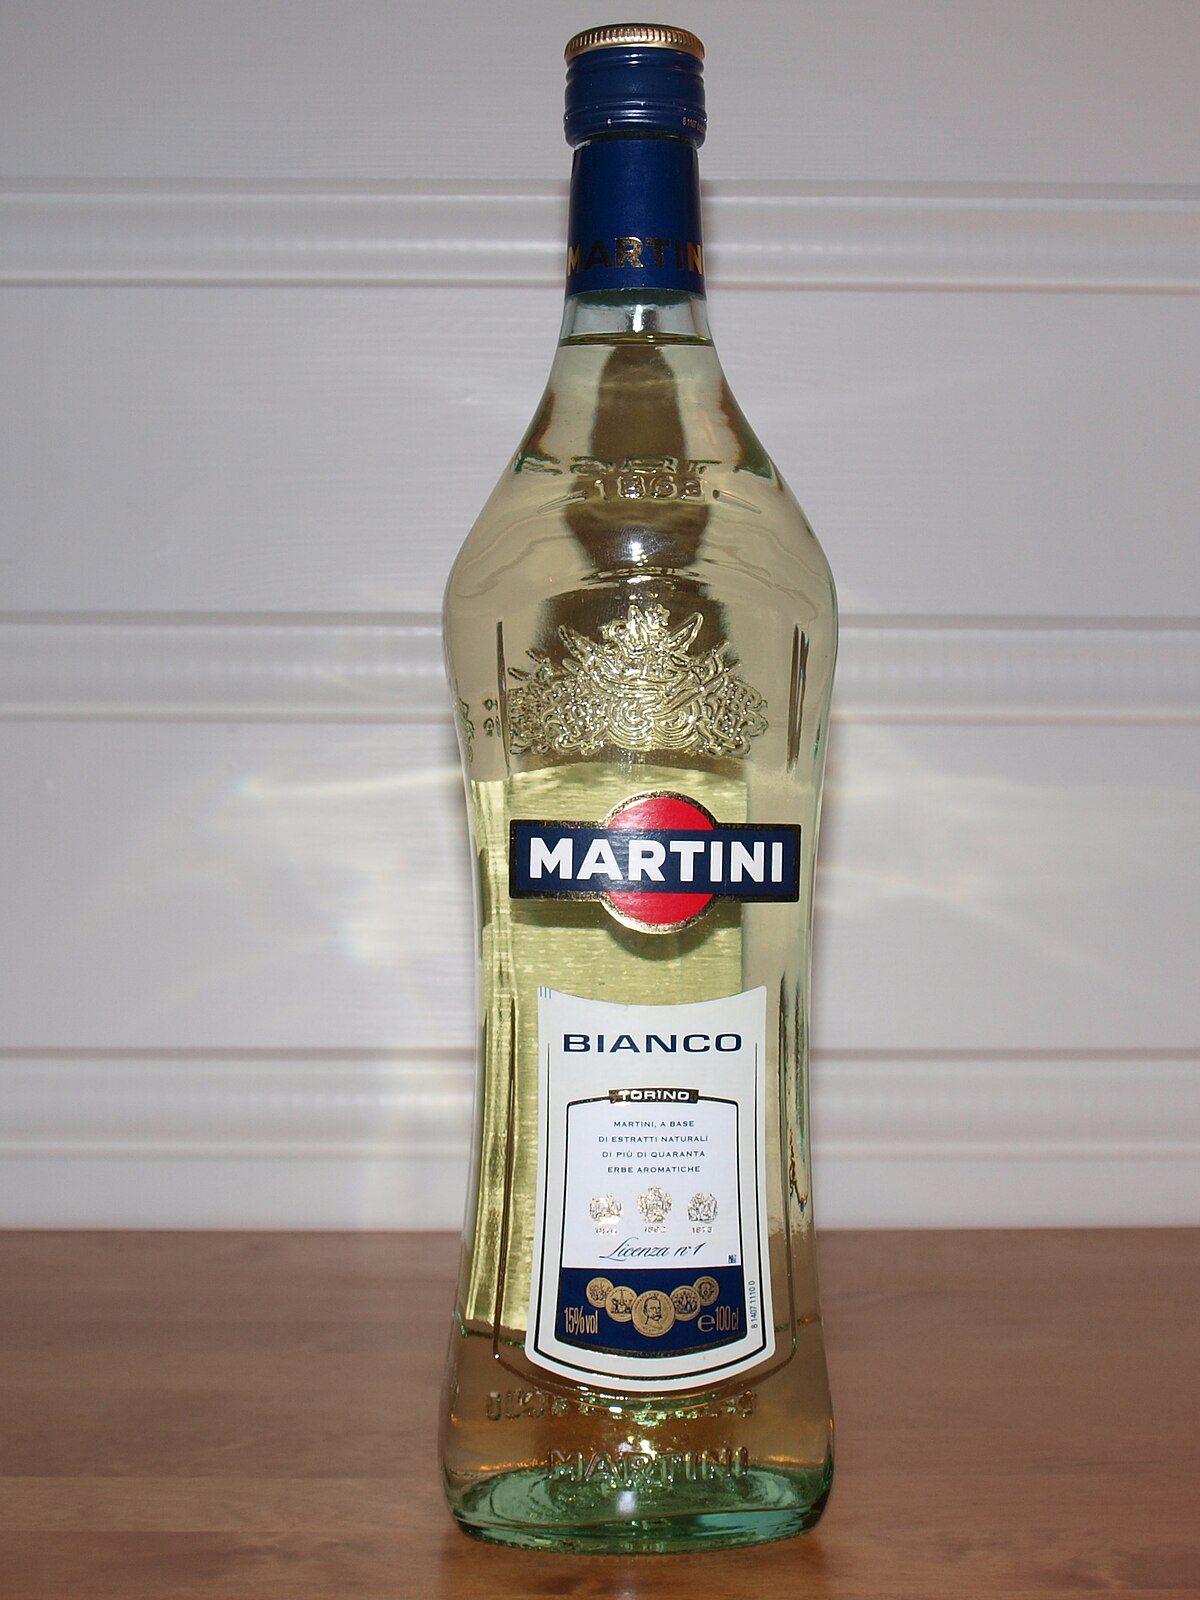 https://upload.wikimedia.org/wikipedia/commons/thumb/f/f9/Martini_Bianco.JPG/1200px-Martini_Bianco.JPG